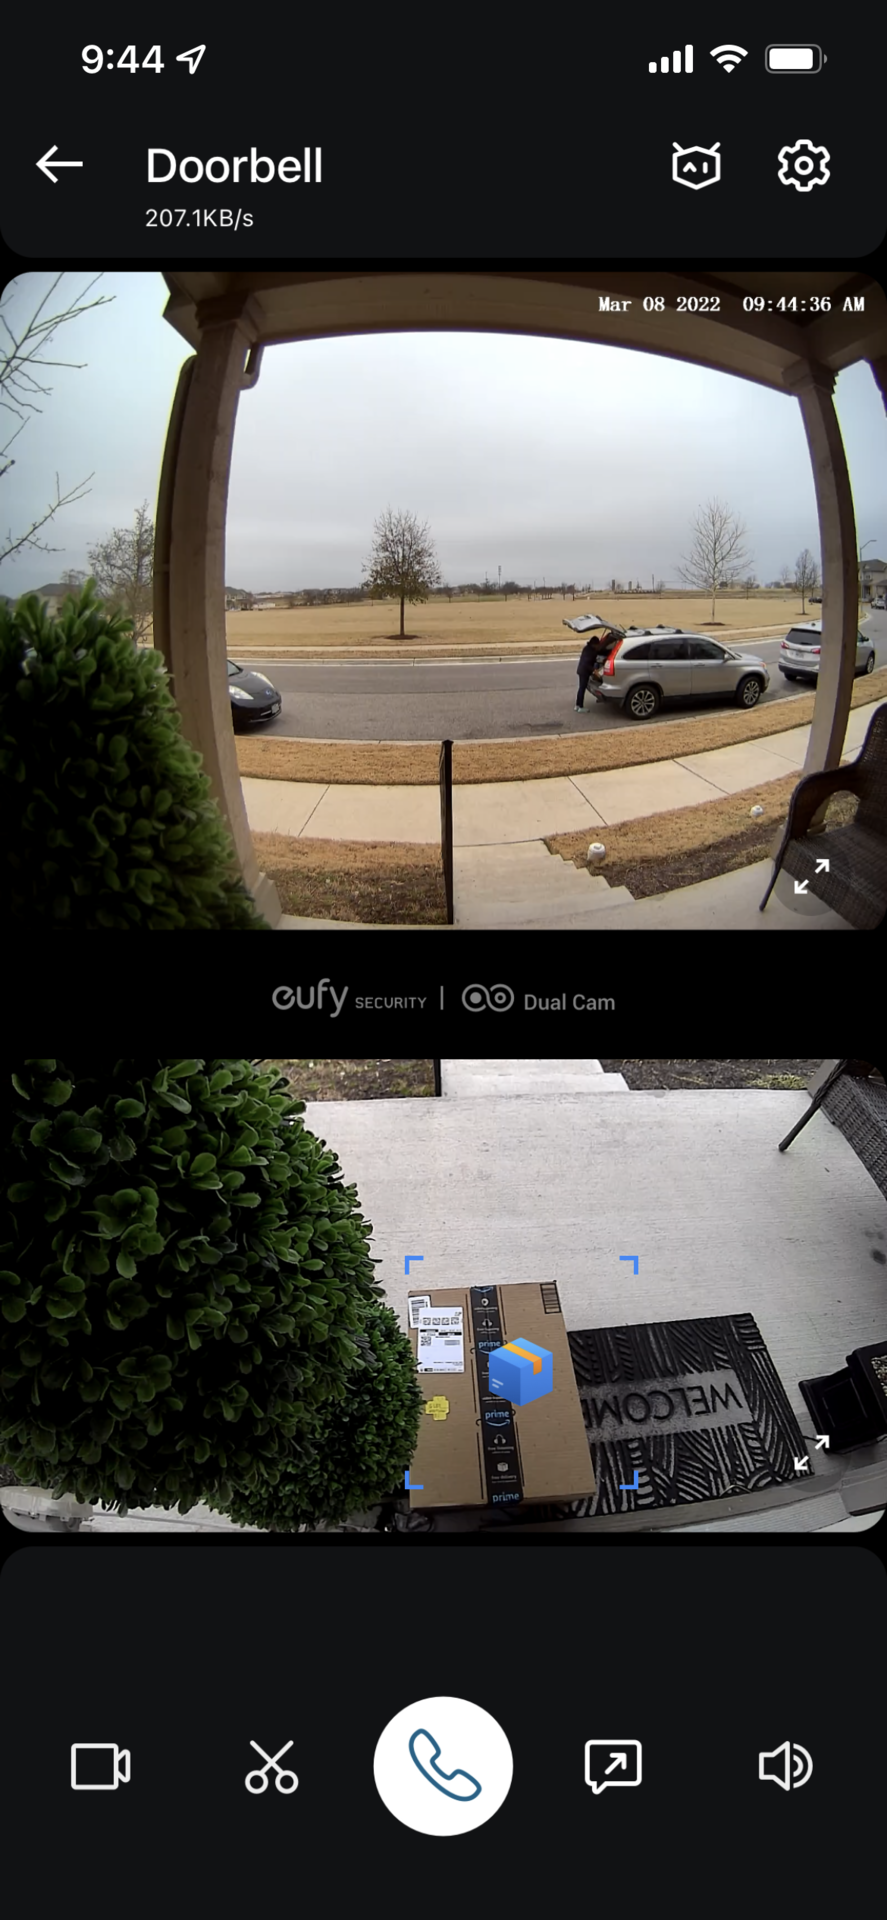 eufy视频门铃上的包装交付